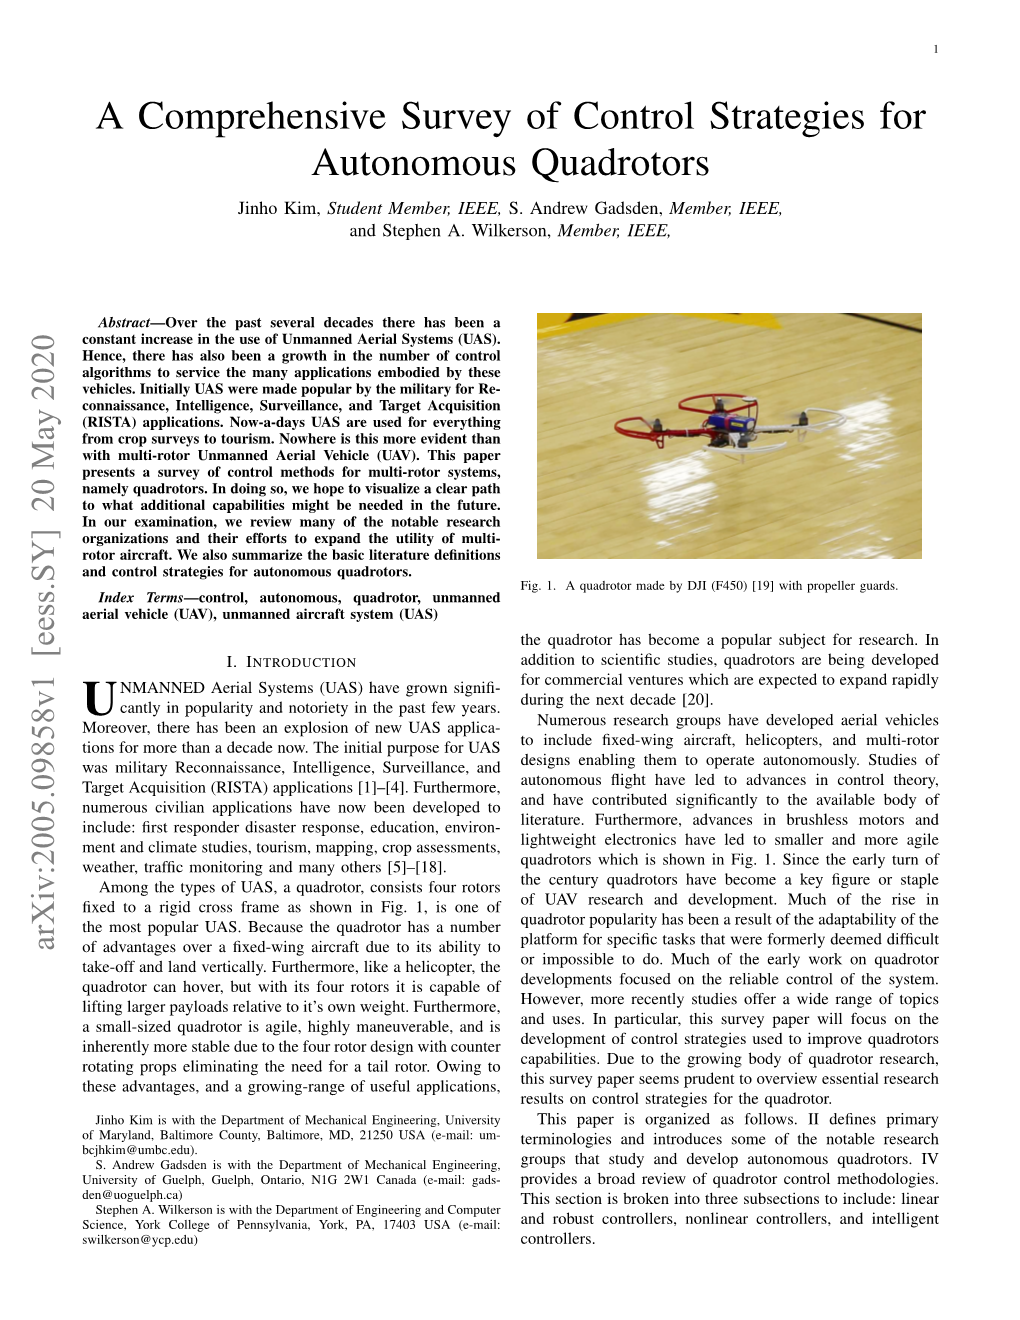 A Comprehensive Survey of Control Strategies for Autonomous Quadrotors Jinho Kim, Student Member, IEEE, S